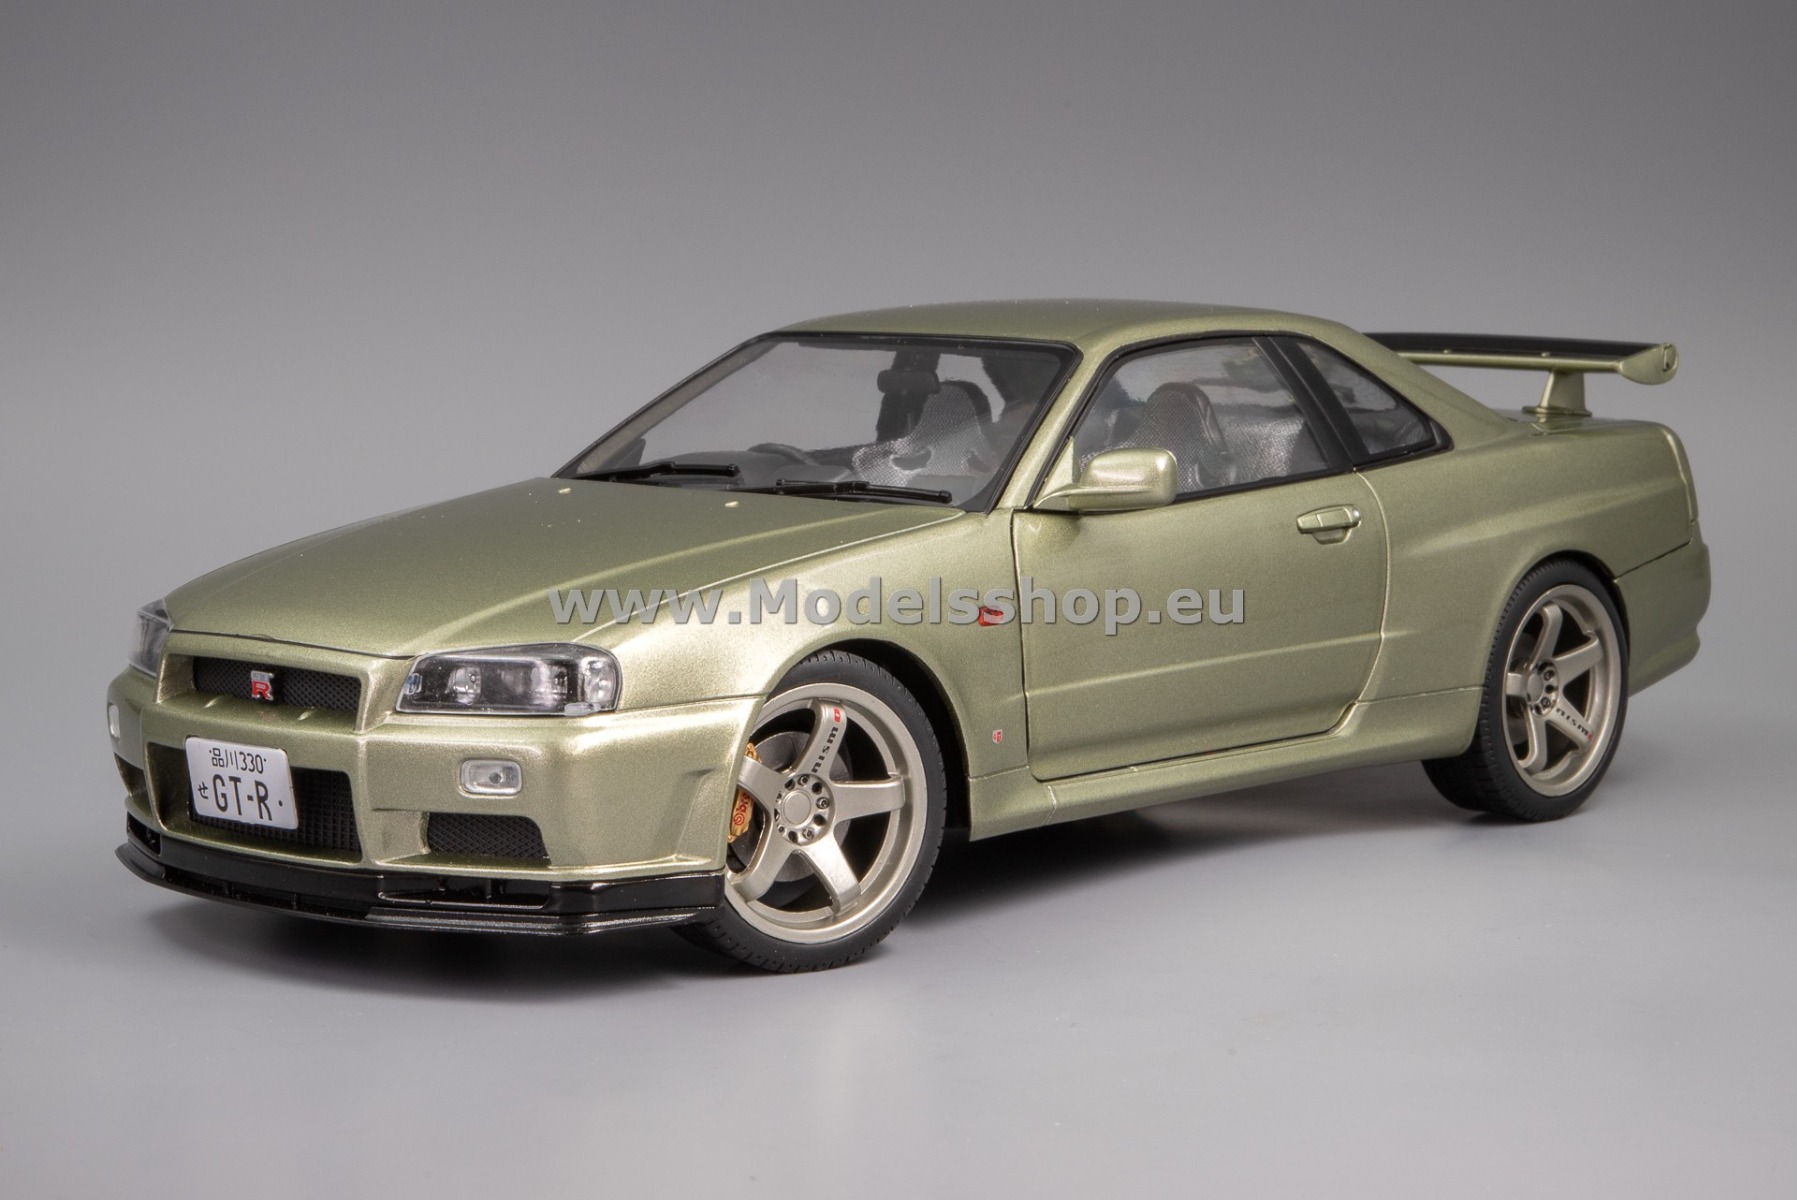 Solido S1804308 Nissan GT-R R34 Skyline, 1999 /light green metallic/